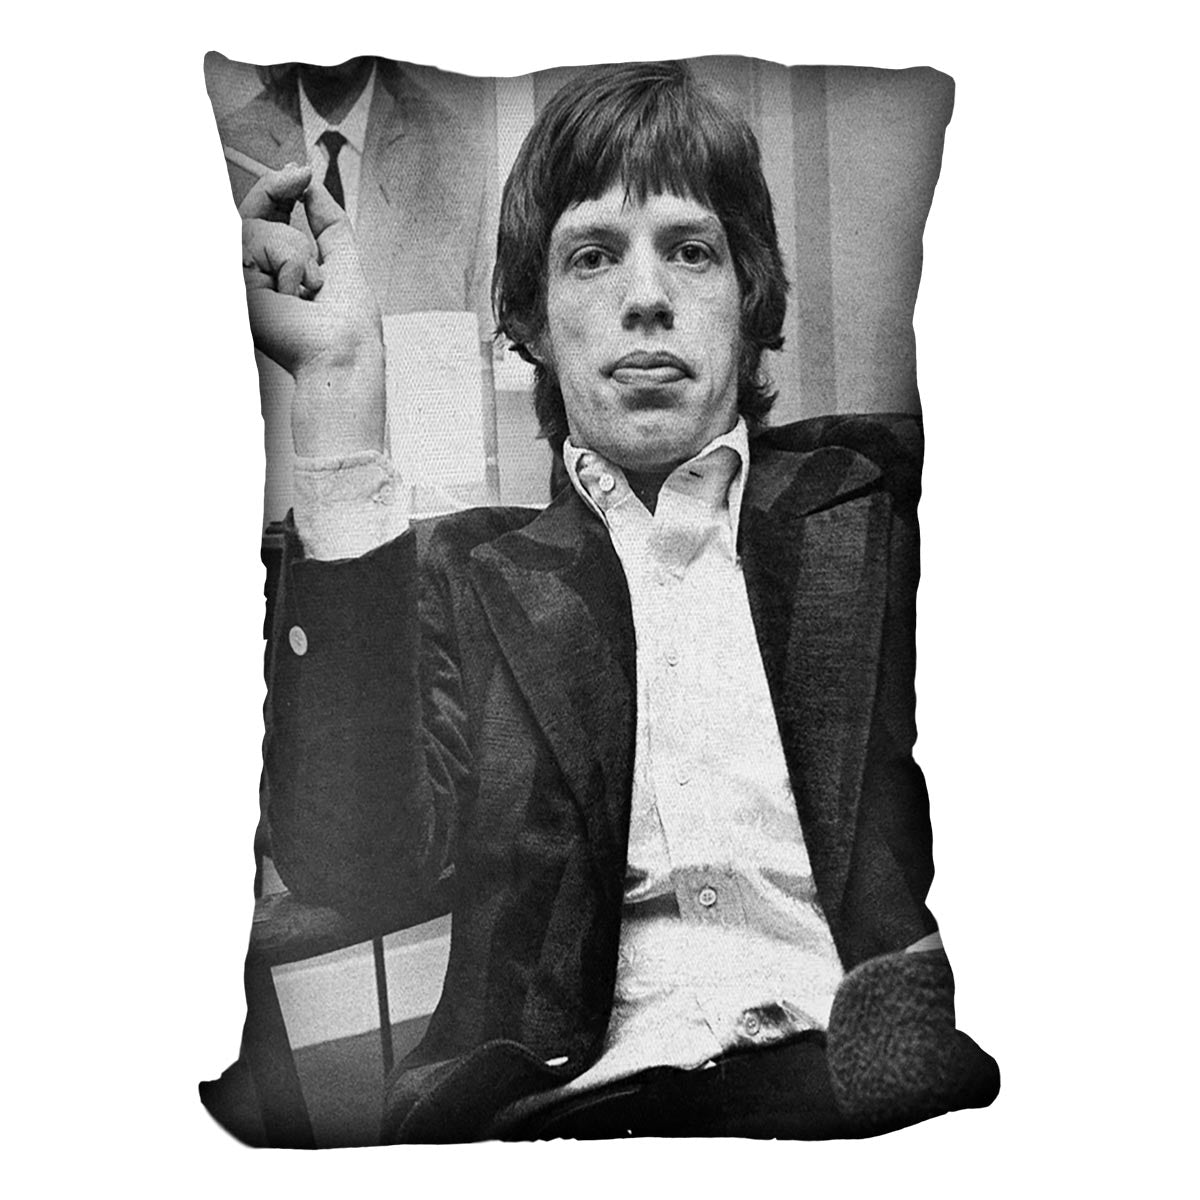 Mick Jagger with a smoke Cushion